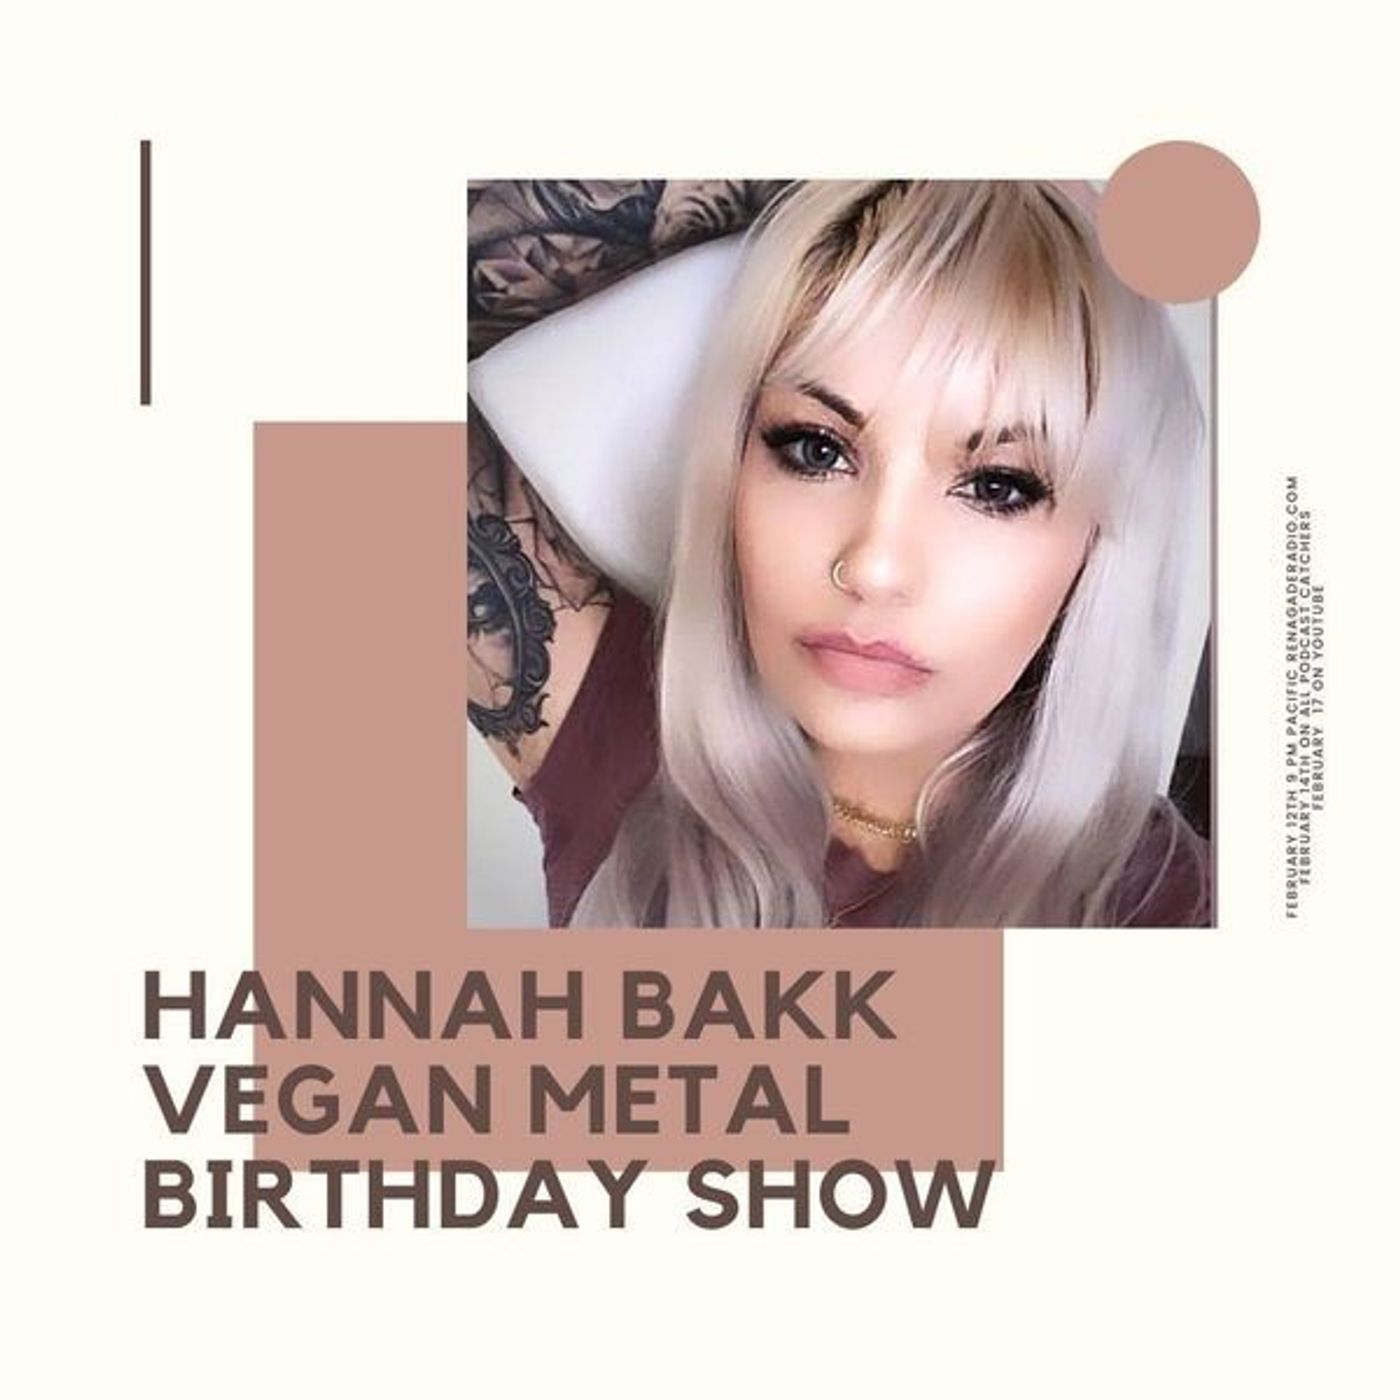 281: Hannah's Vegan Metal Birthday Party from 2021